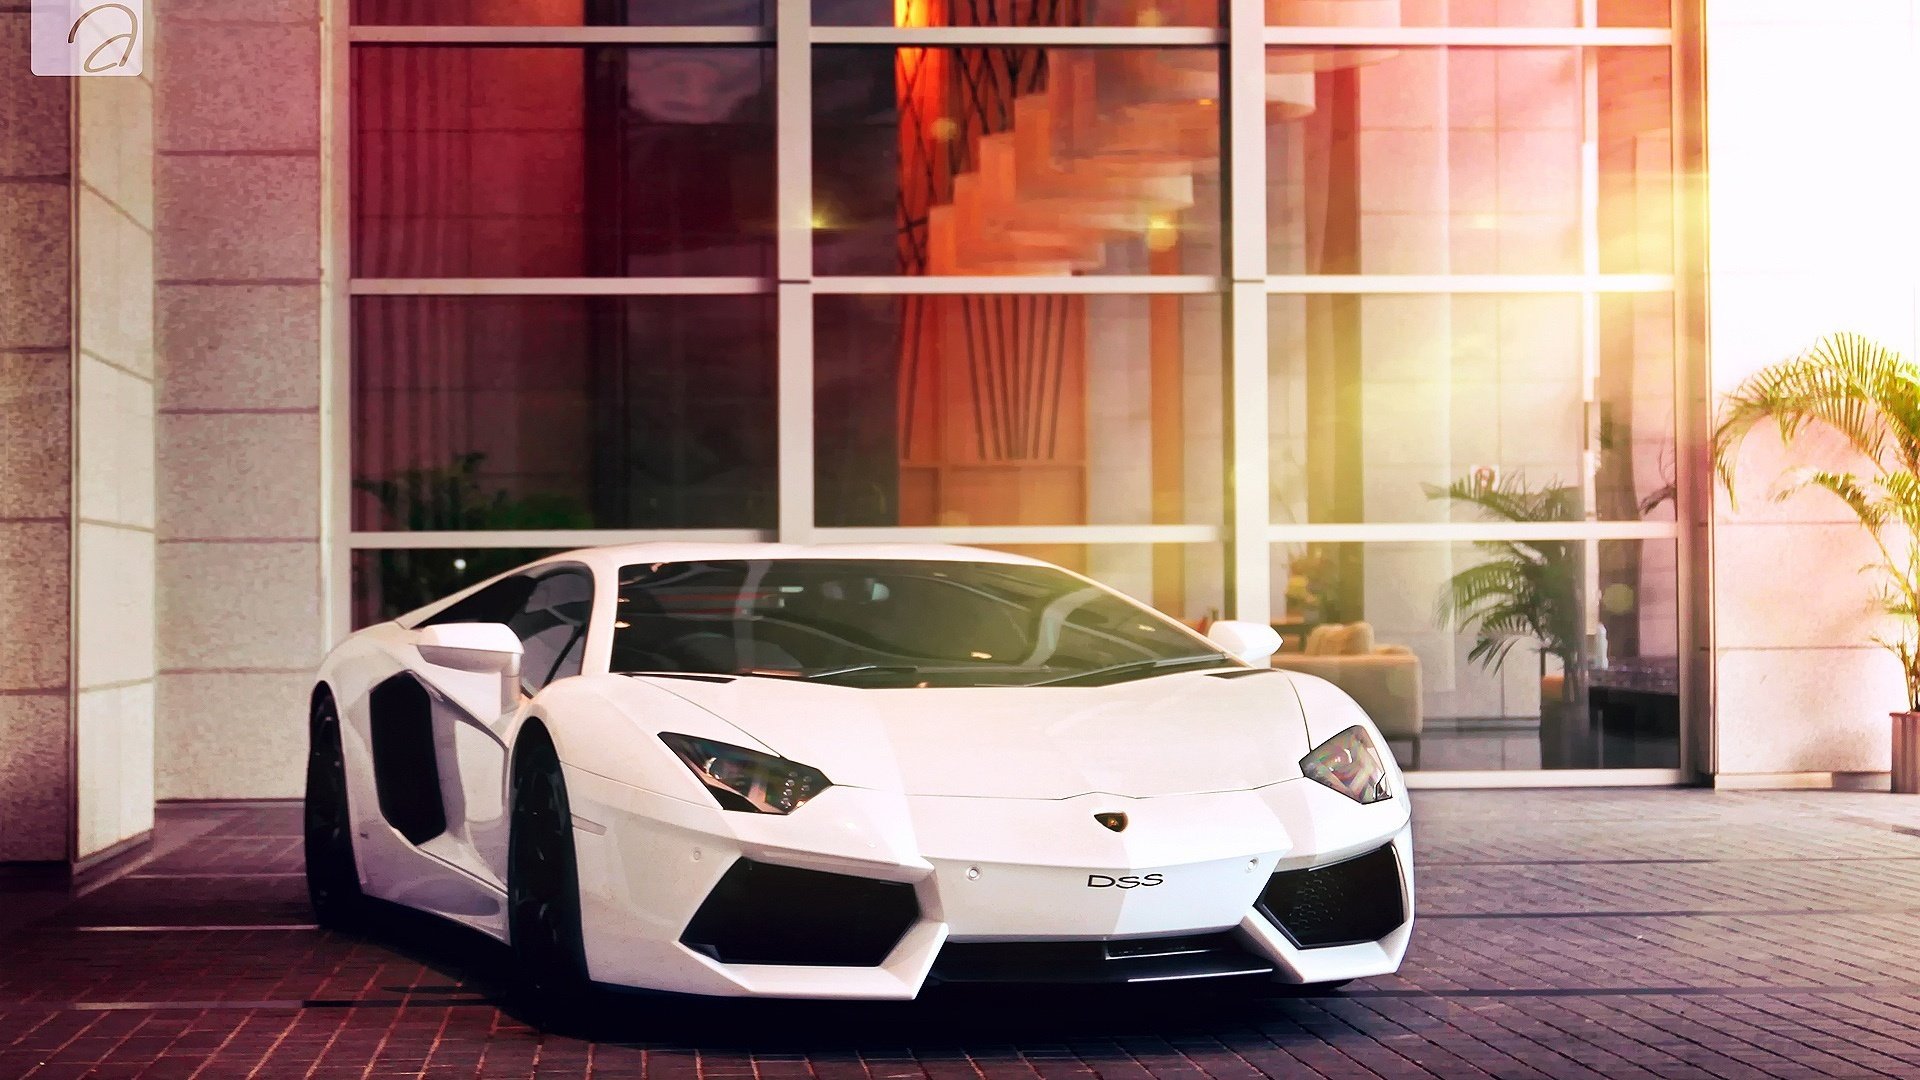 Download full hd 1080p Lamborghini Aventador desktop background ID:324191 for free